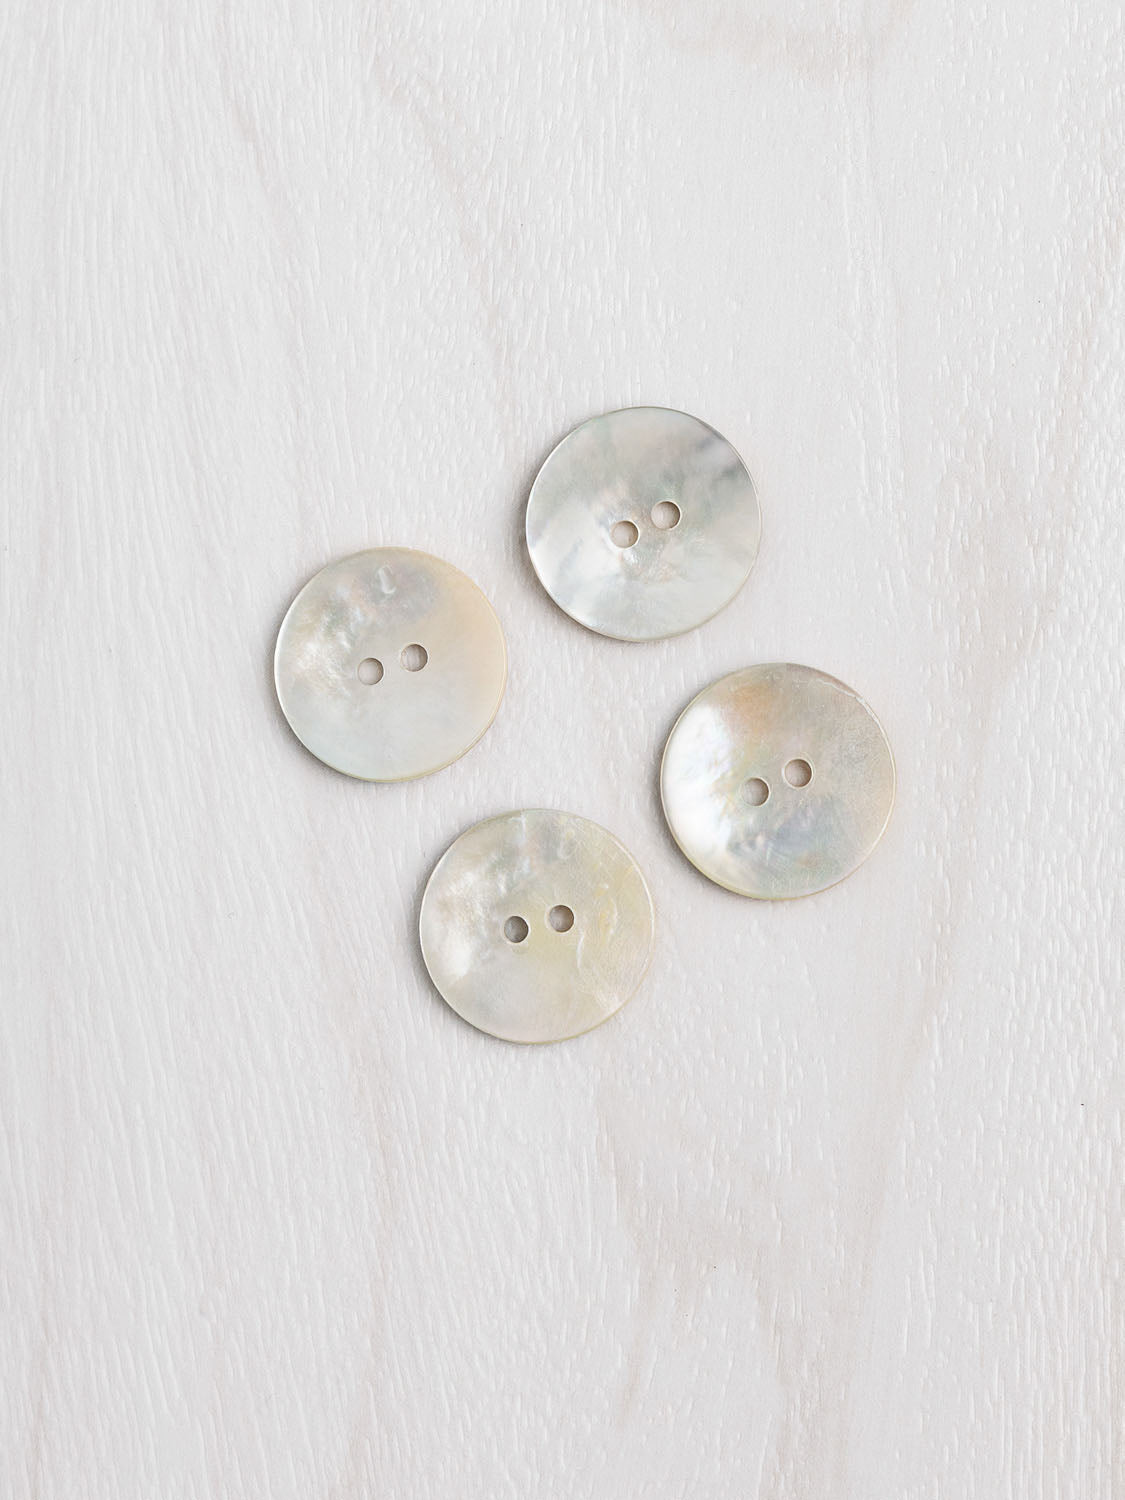 Buttons – Core Fabrics